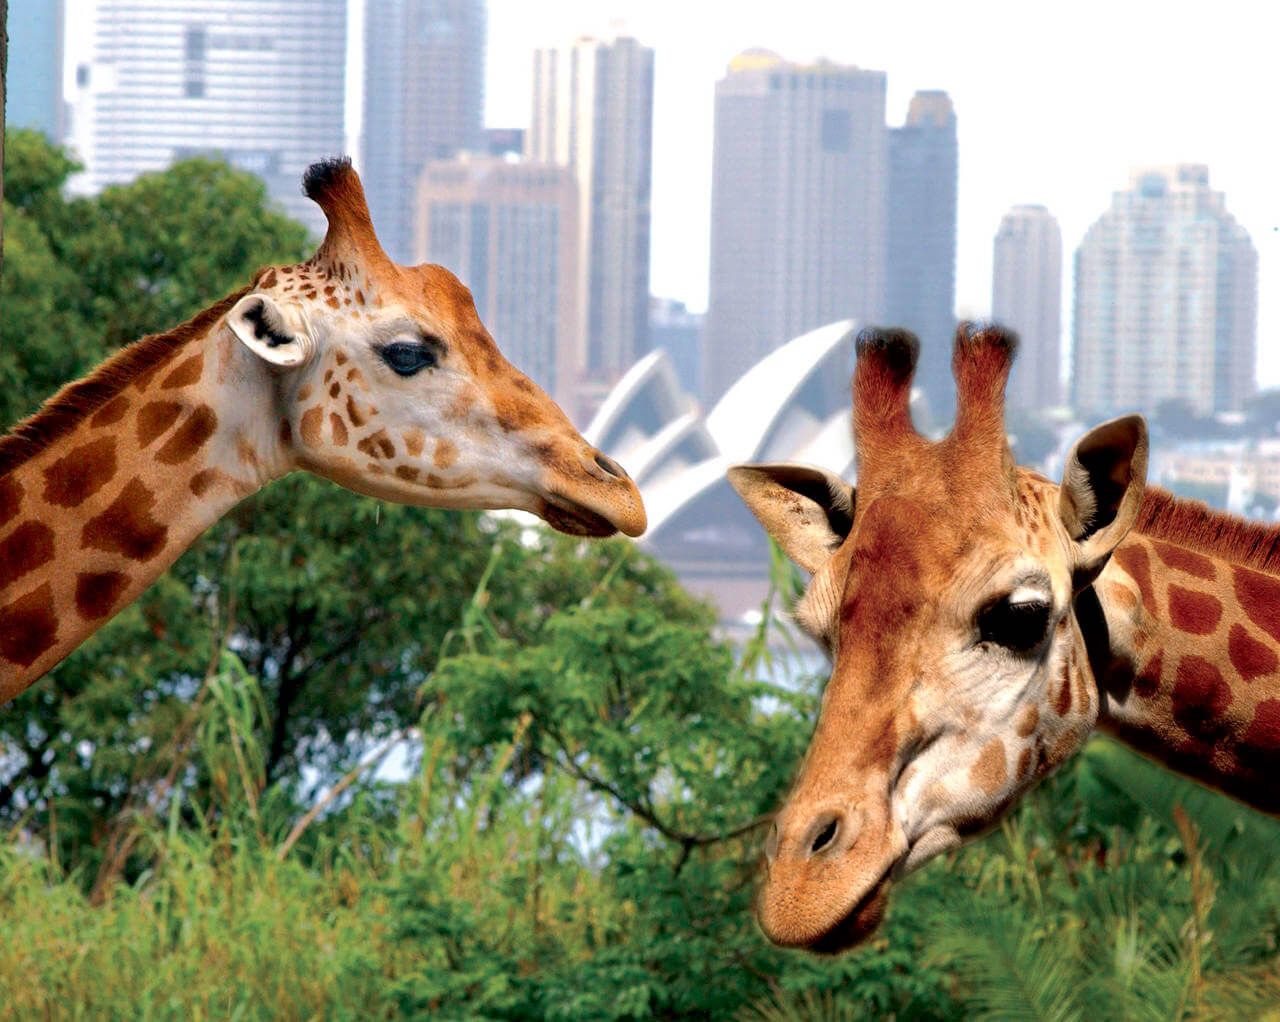 Giraffes at Taronga Zoo